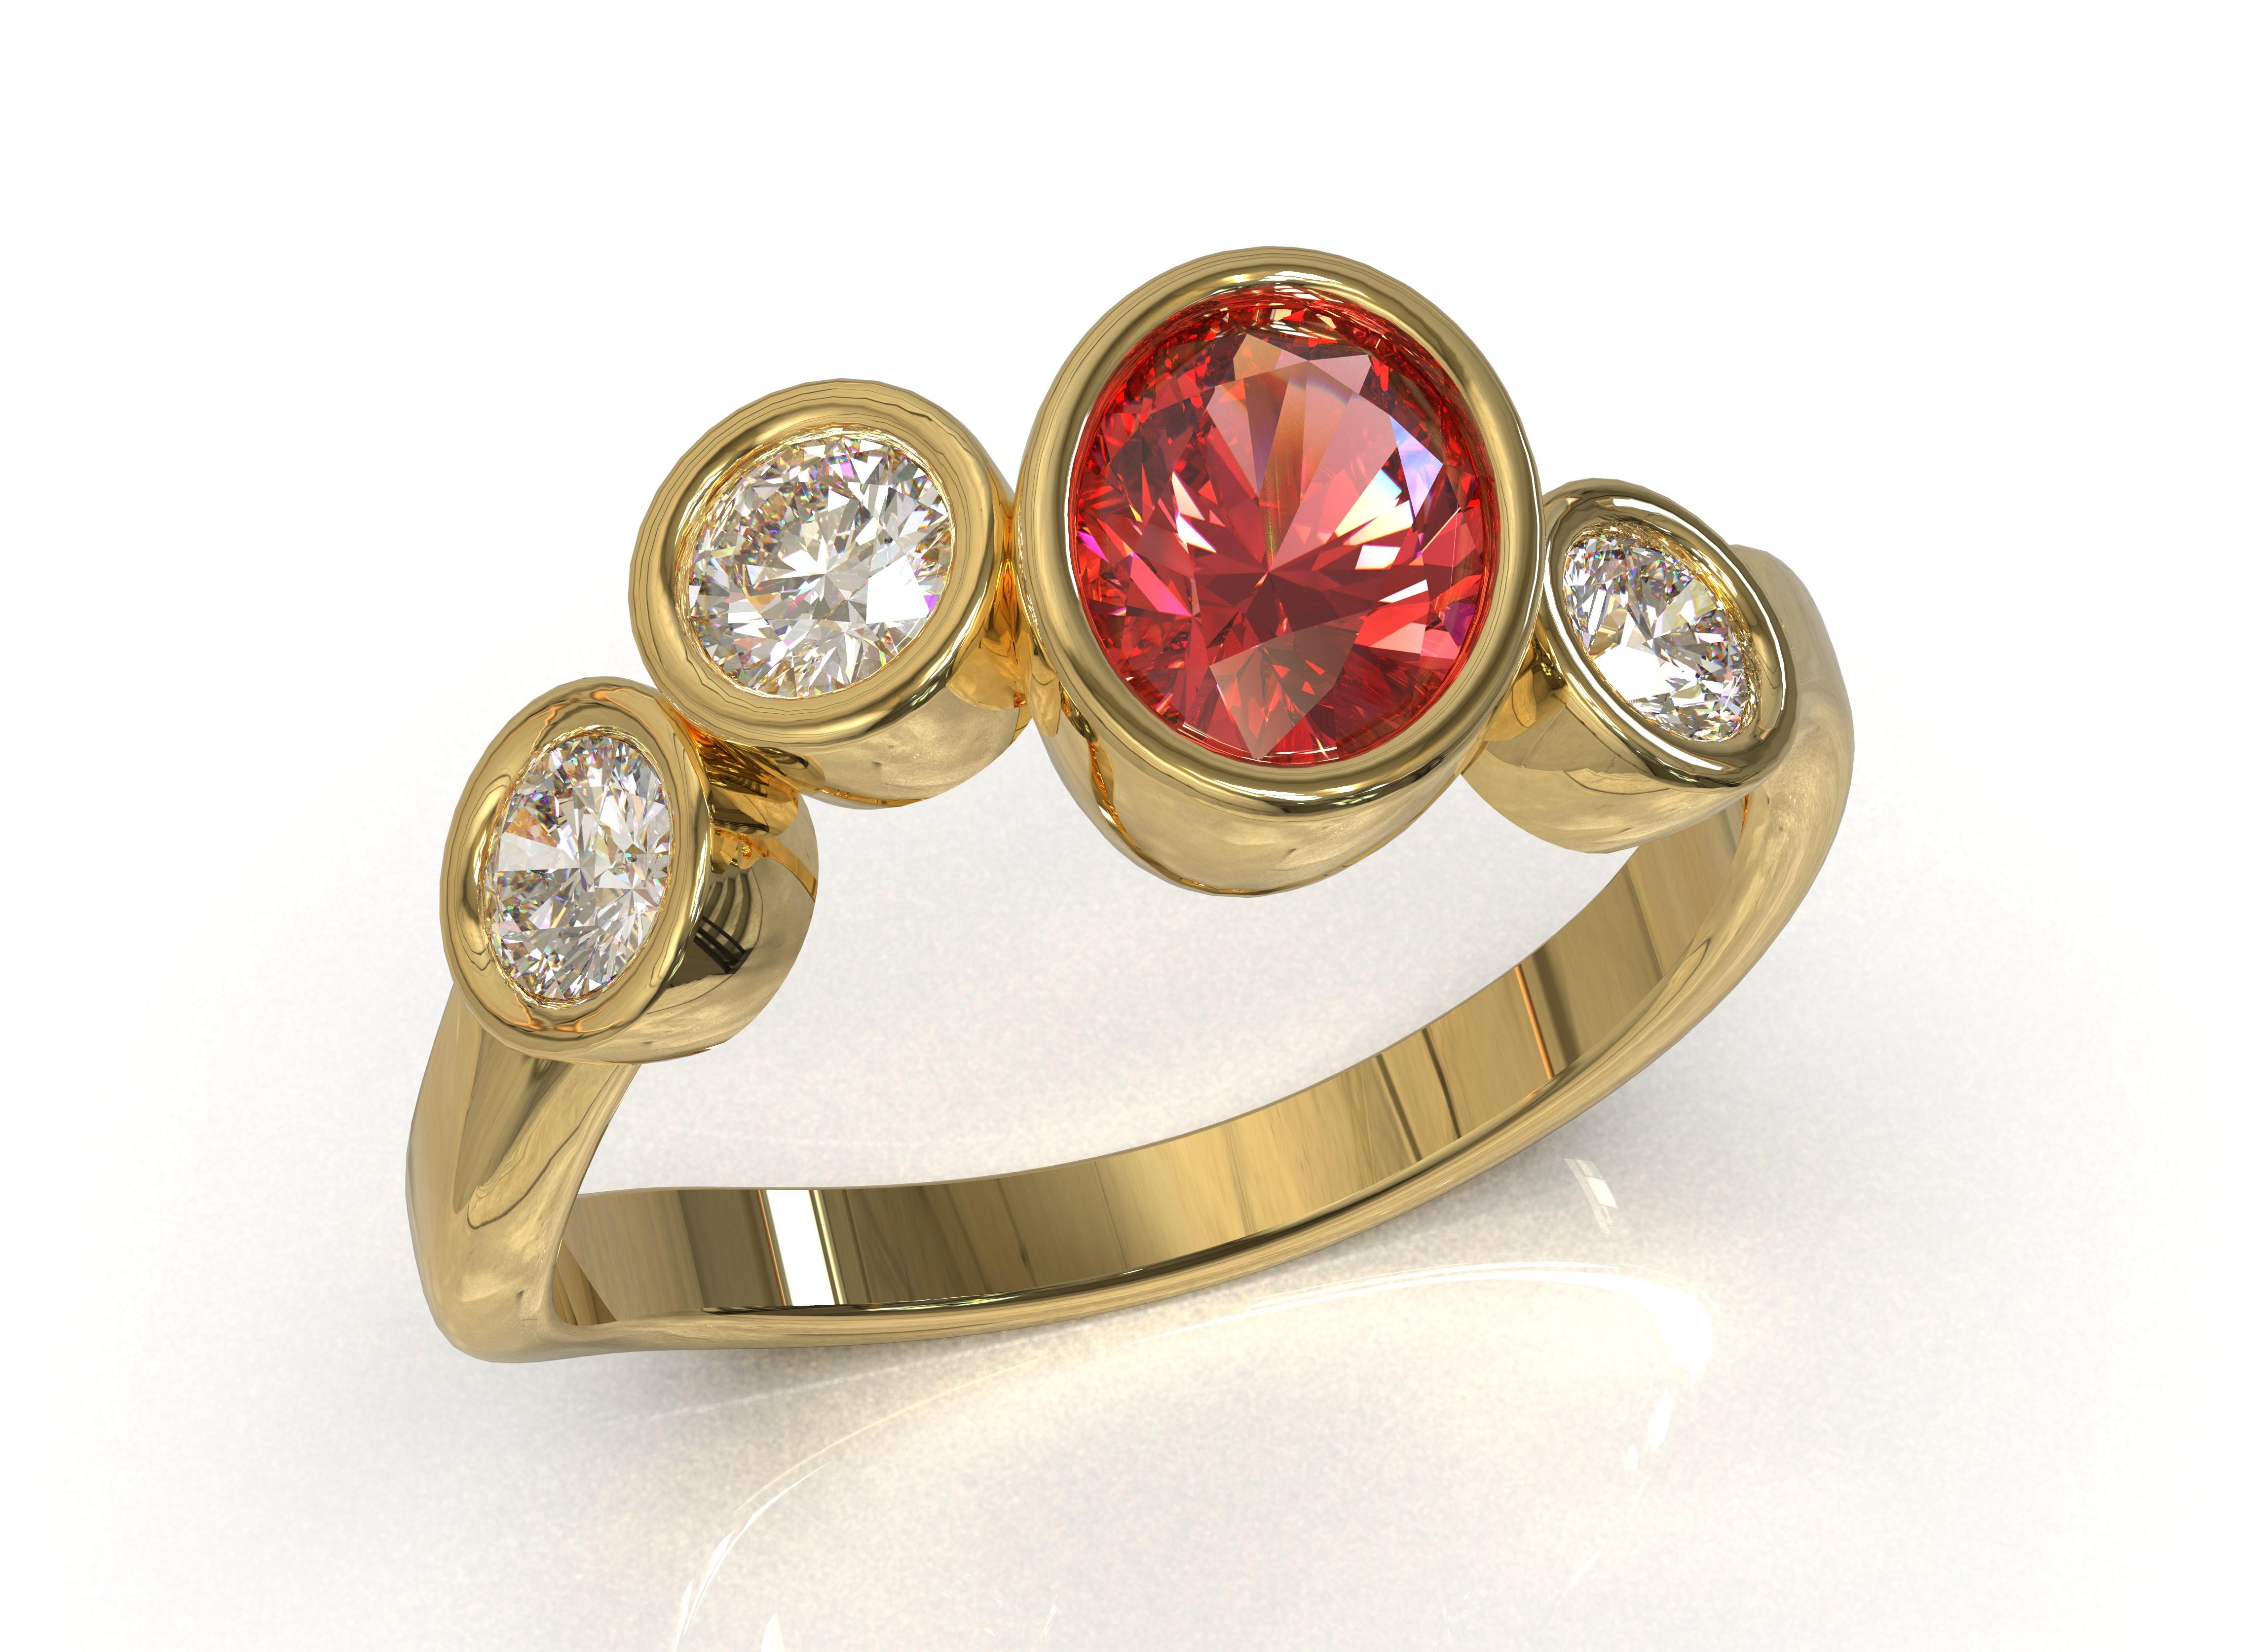 Women's Kian Design 1.00 Carat Oval Cut Ruby Engagement Ring in 18 Carat Yellow Gold